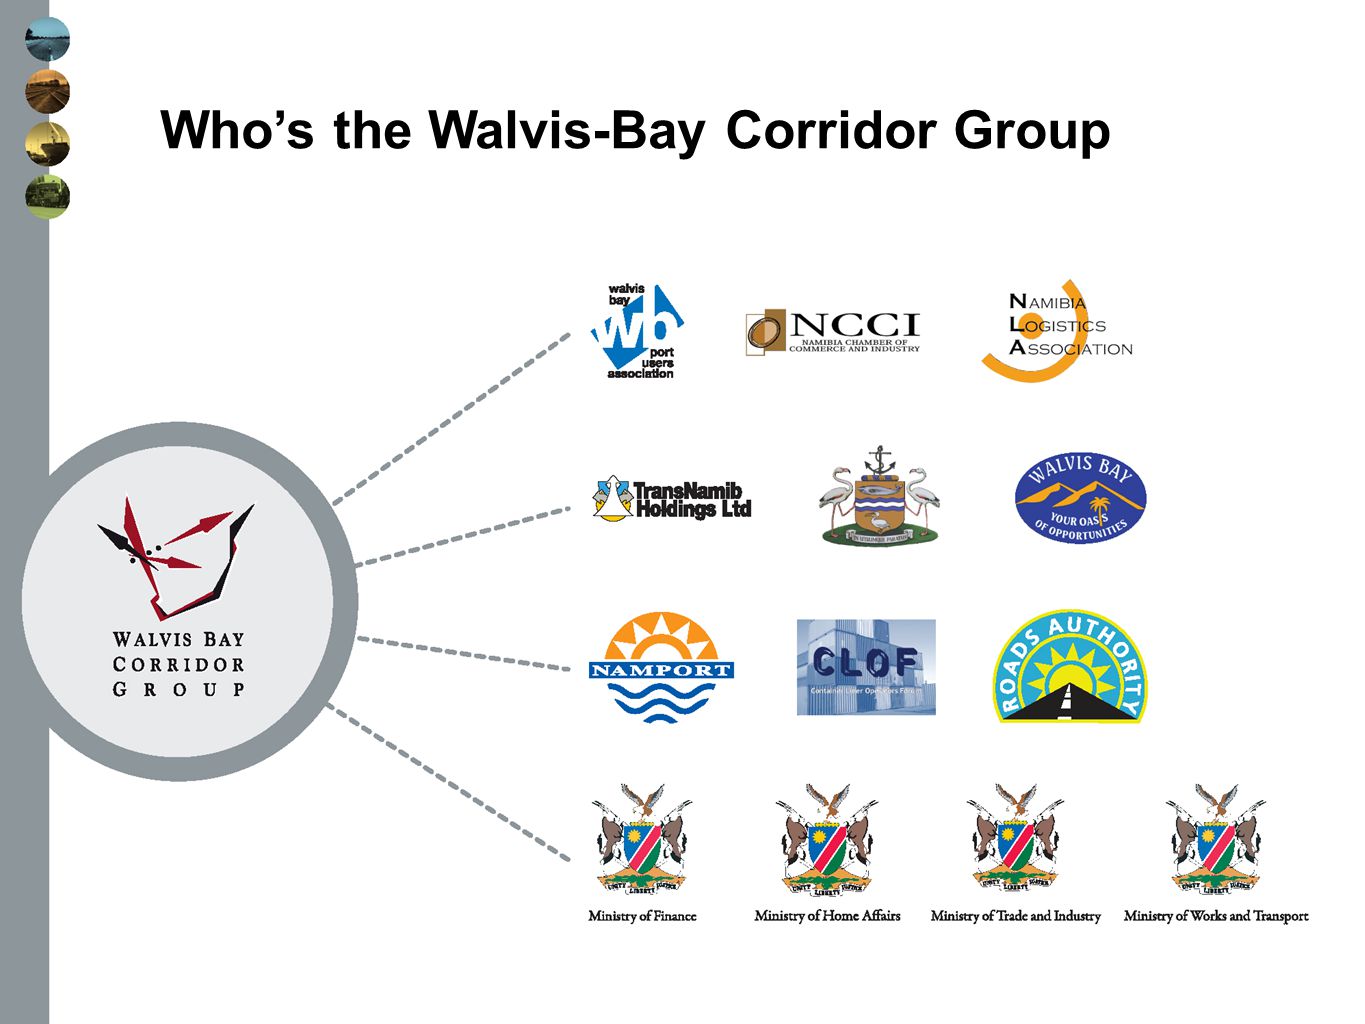 Who’s the Walvis-Bay Corridor Group